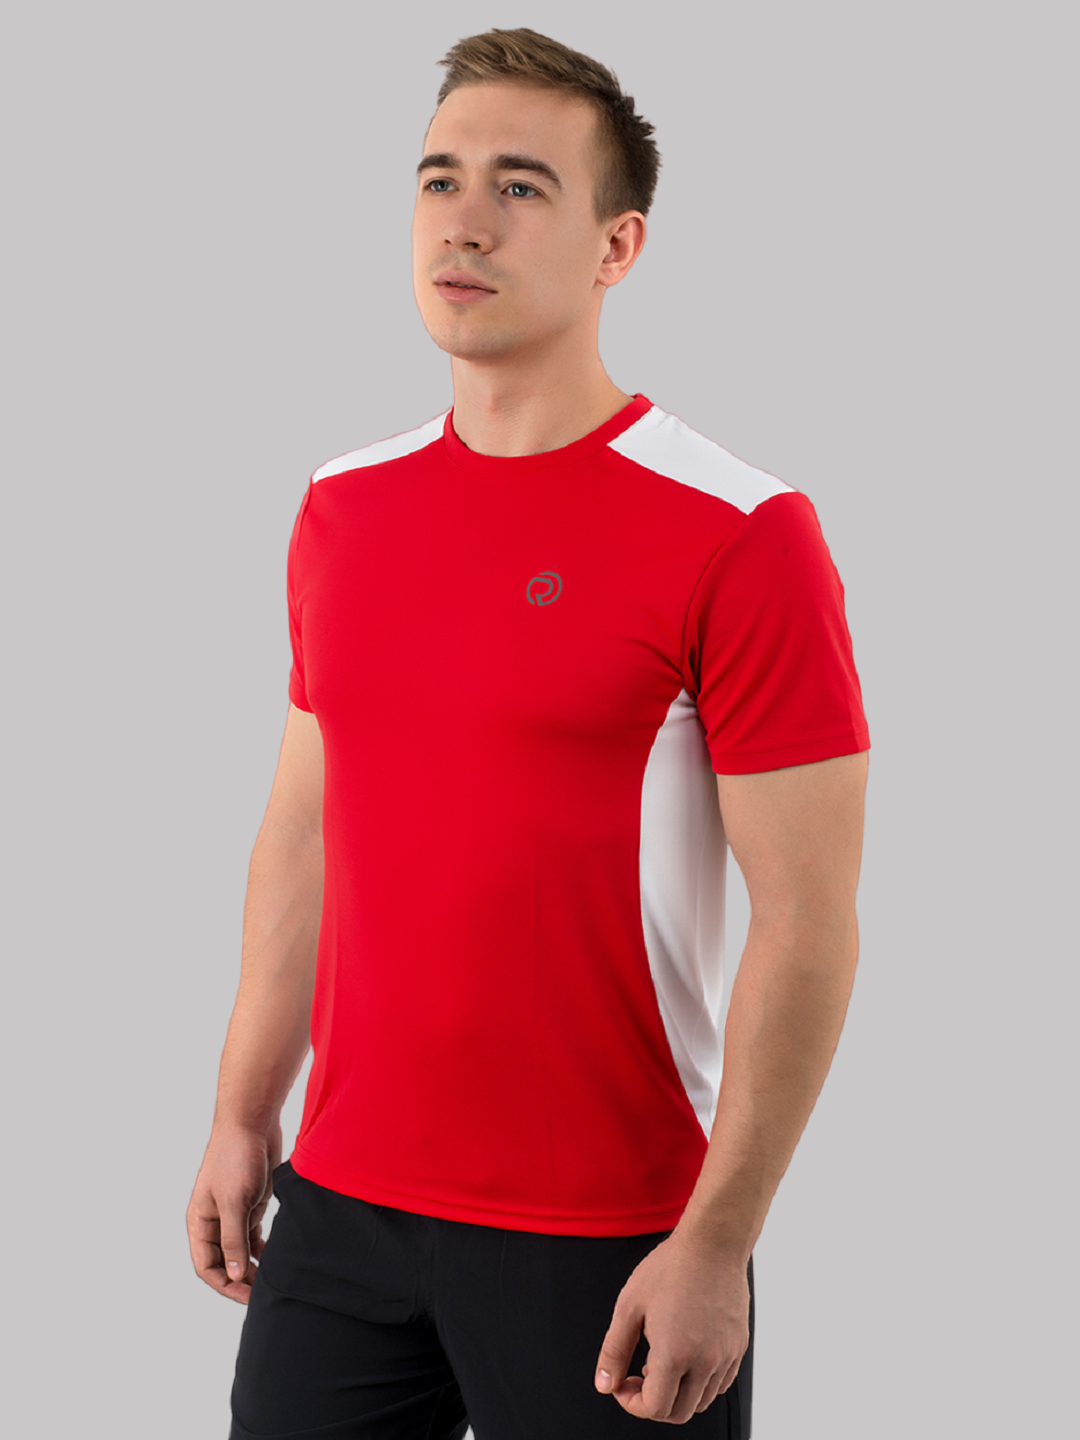 Men's Dry Fit Sports & Training Tshirt with Mandarin Collar